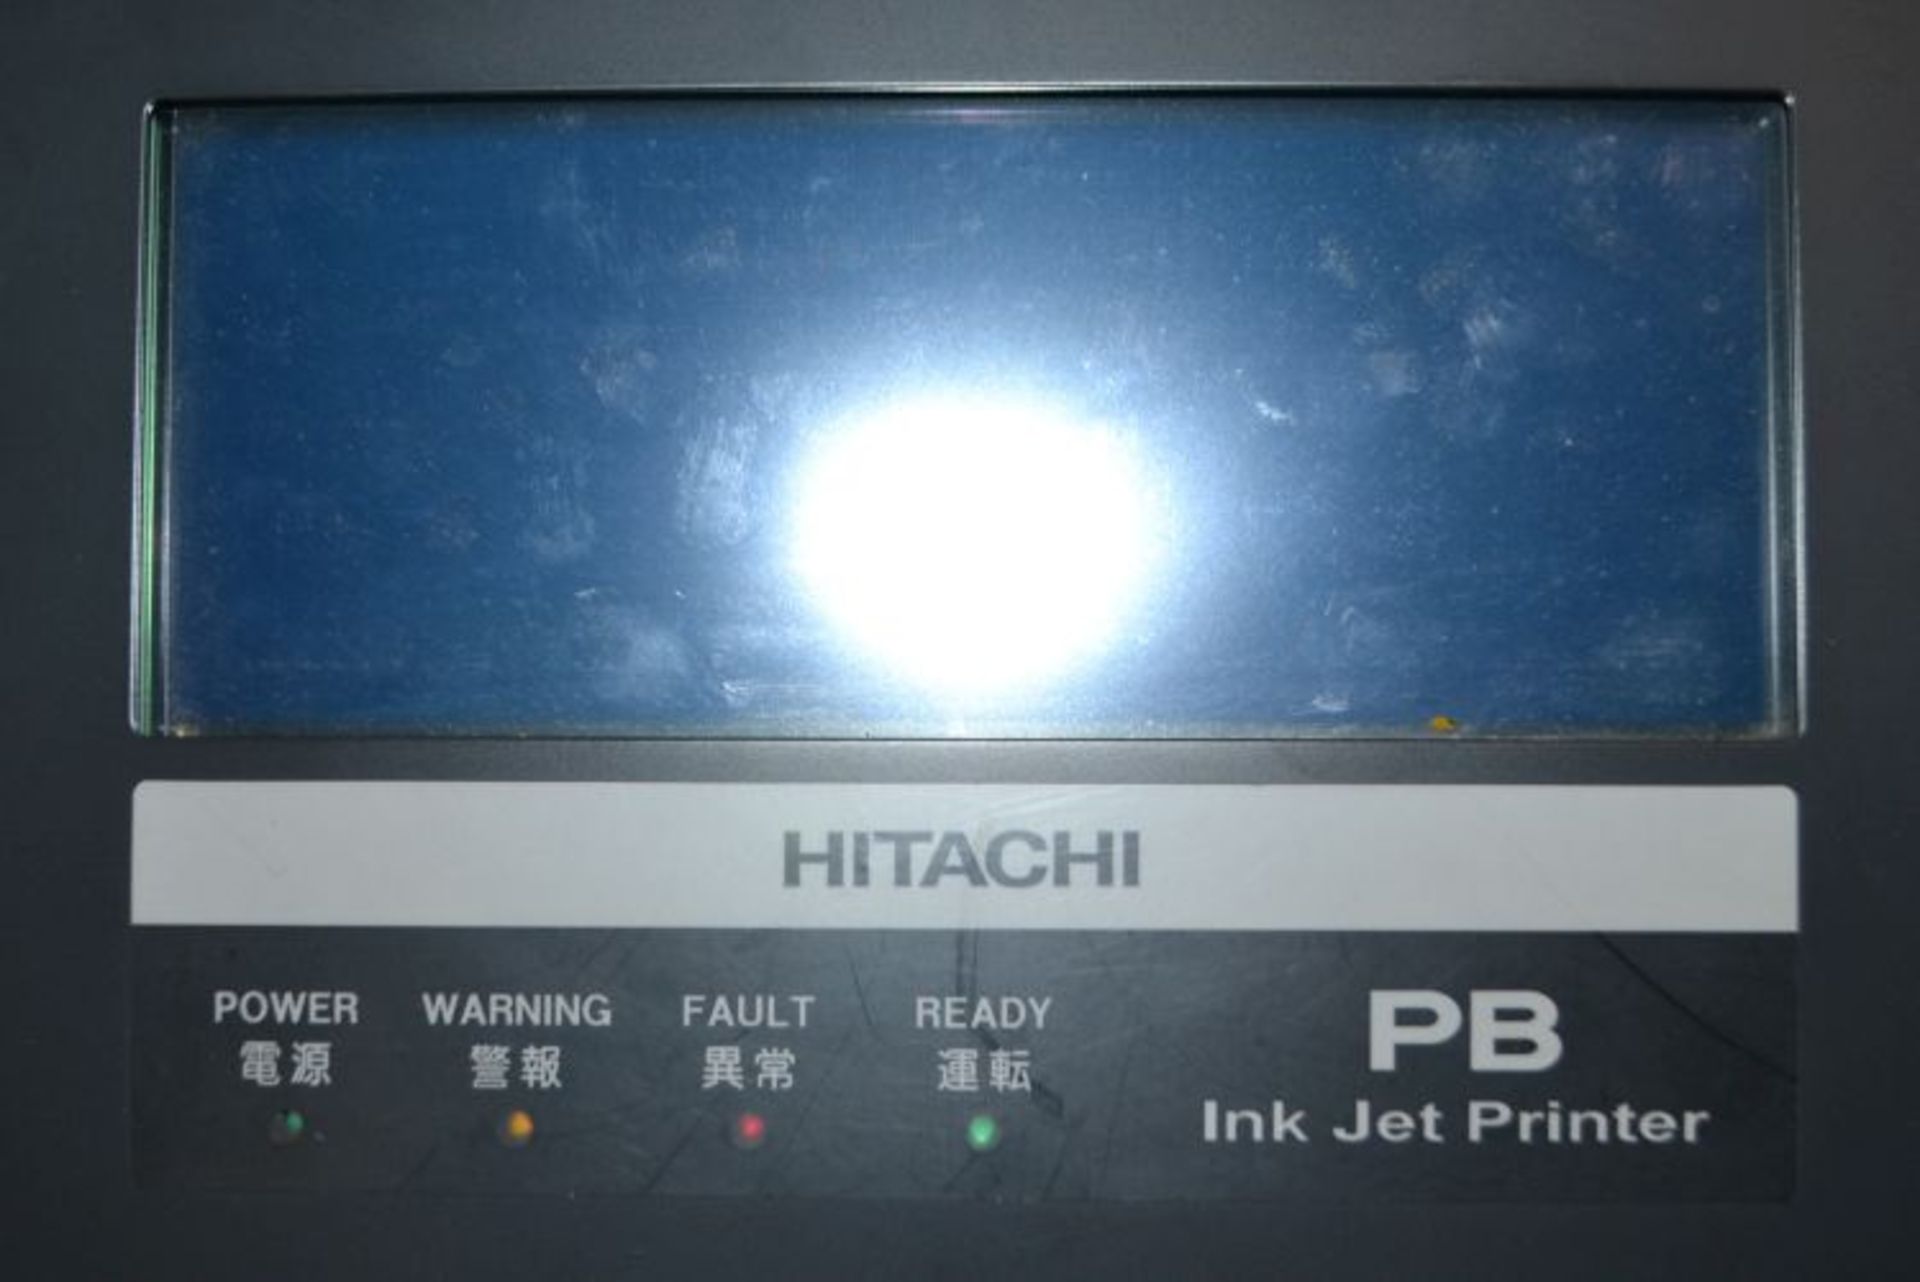 Hitachi Ink jet printer - Image 5 of 6